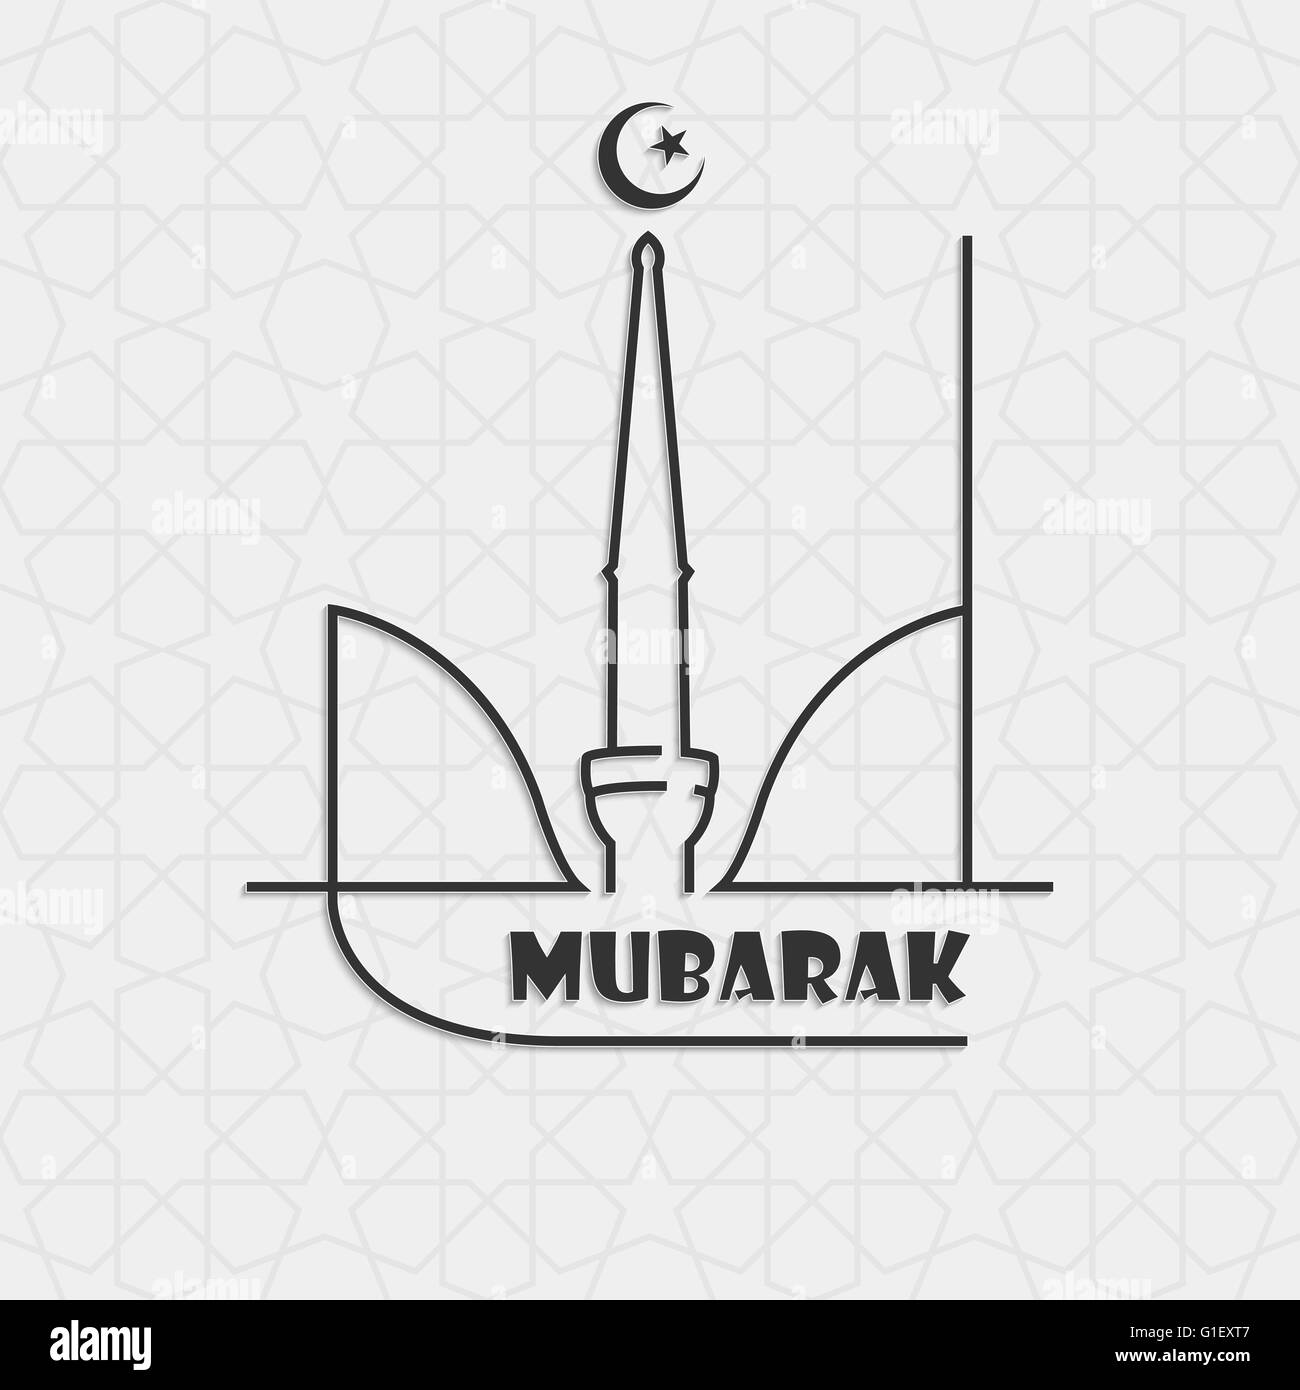 Vector Illustration of Eid Mubarak text design on seamless islamic decorative background for holy month Ramadan Stock Vector